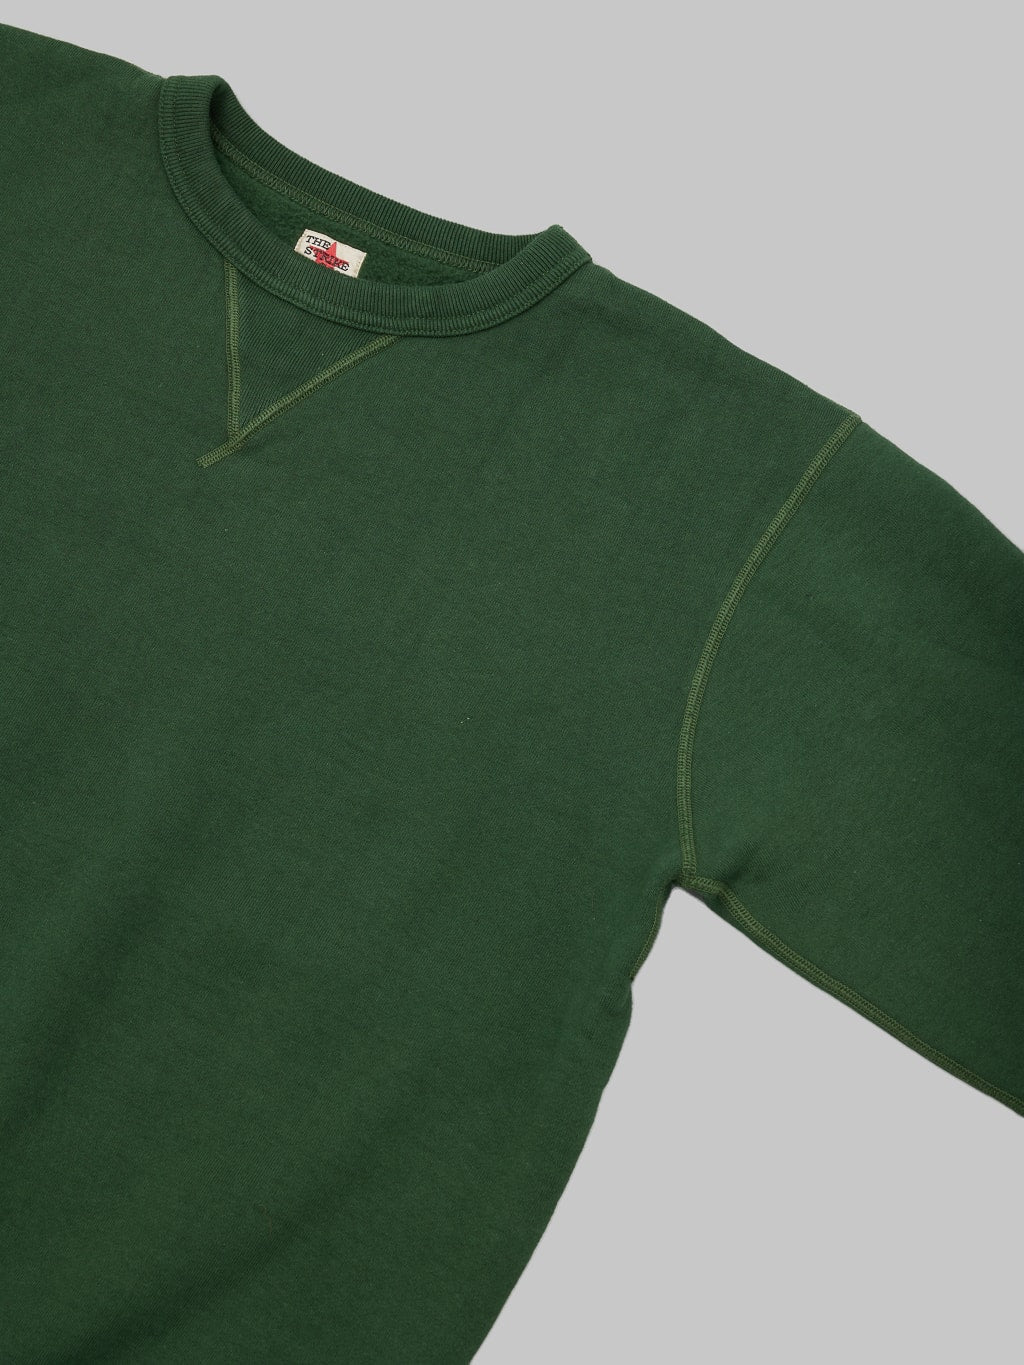 The Strike Gold Loopwheeled Sweatshirt Green no side seams